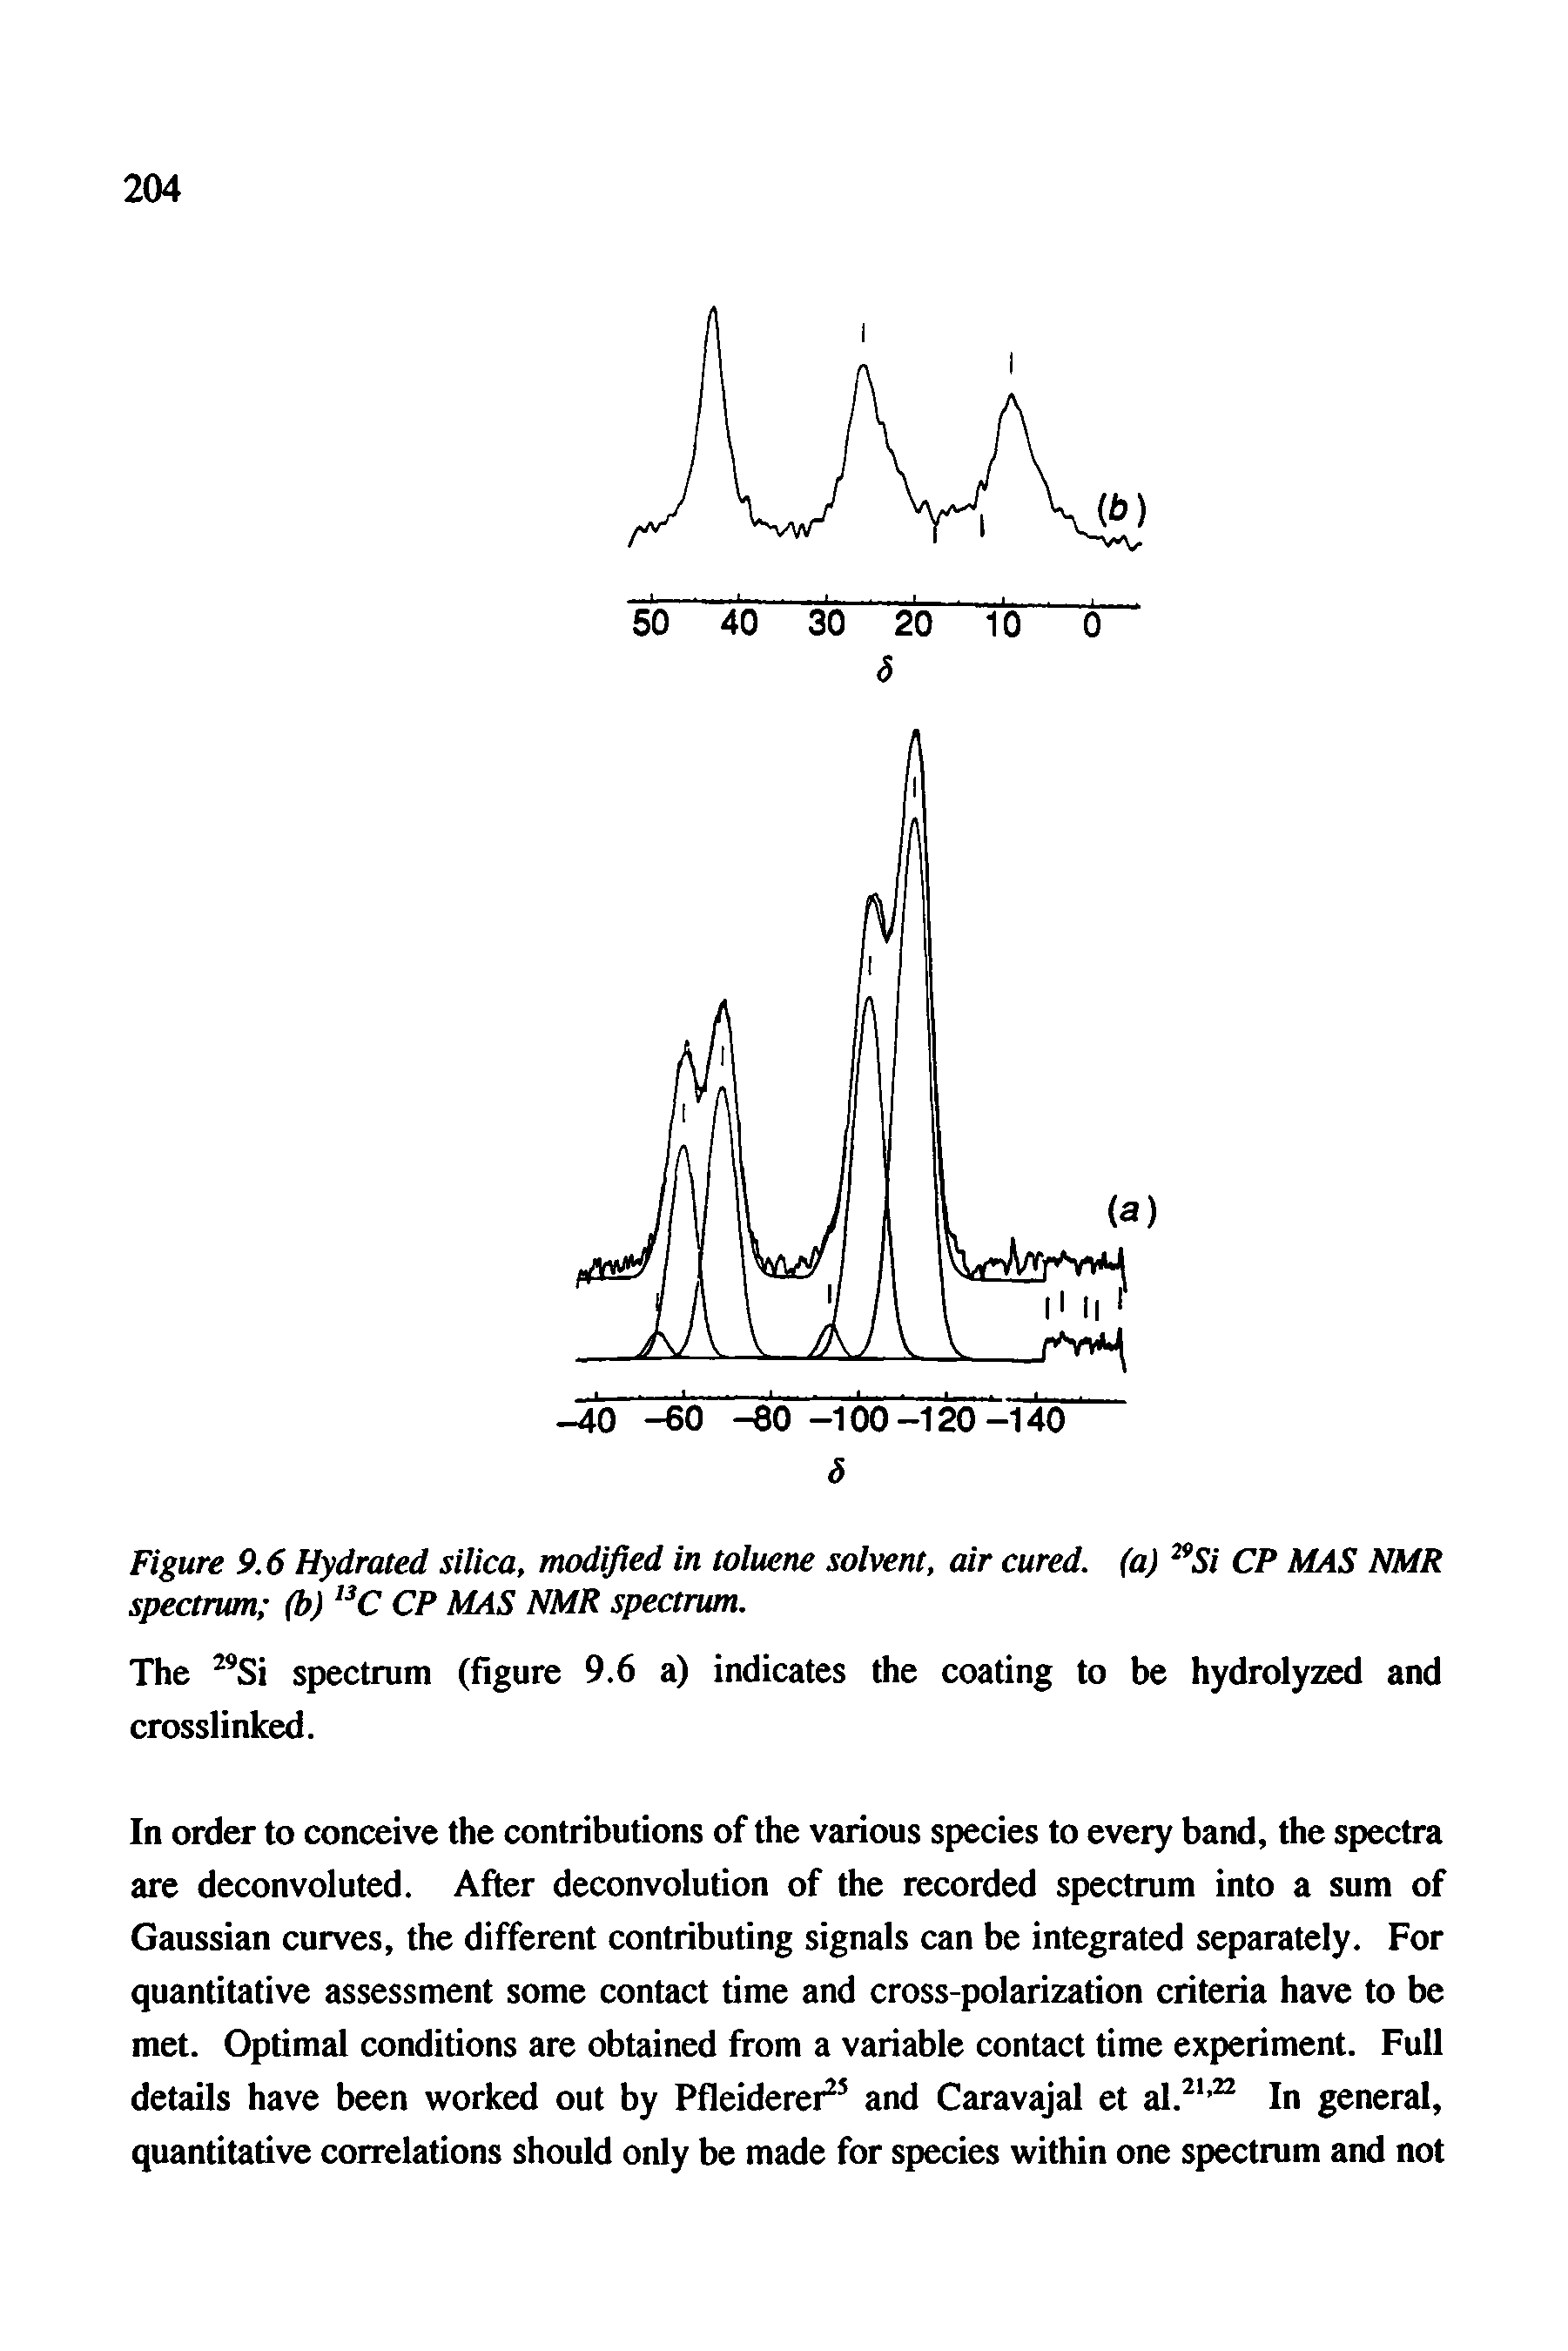 Figure 9.6 Hydrated silica, modified in toluene solvent, air cured, (a) 29Si CP MAS NMR spectrum (b) 13C CP MAS NMR spectrum.